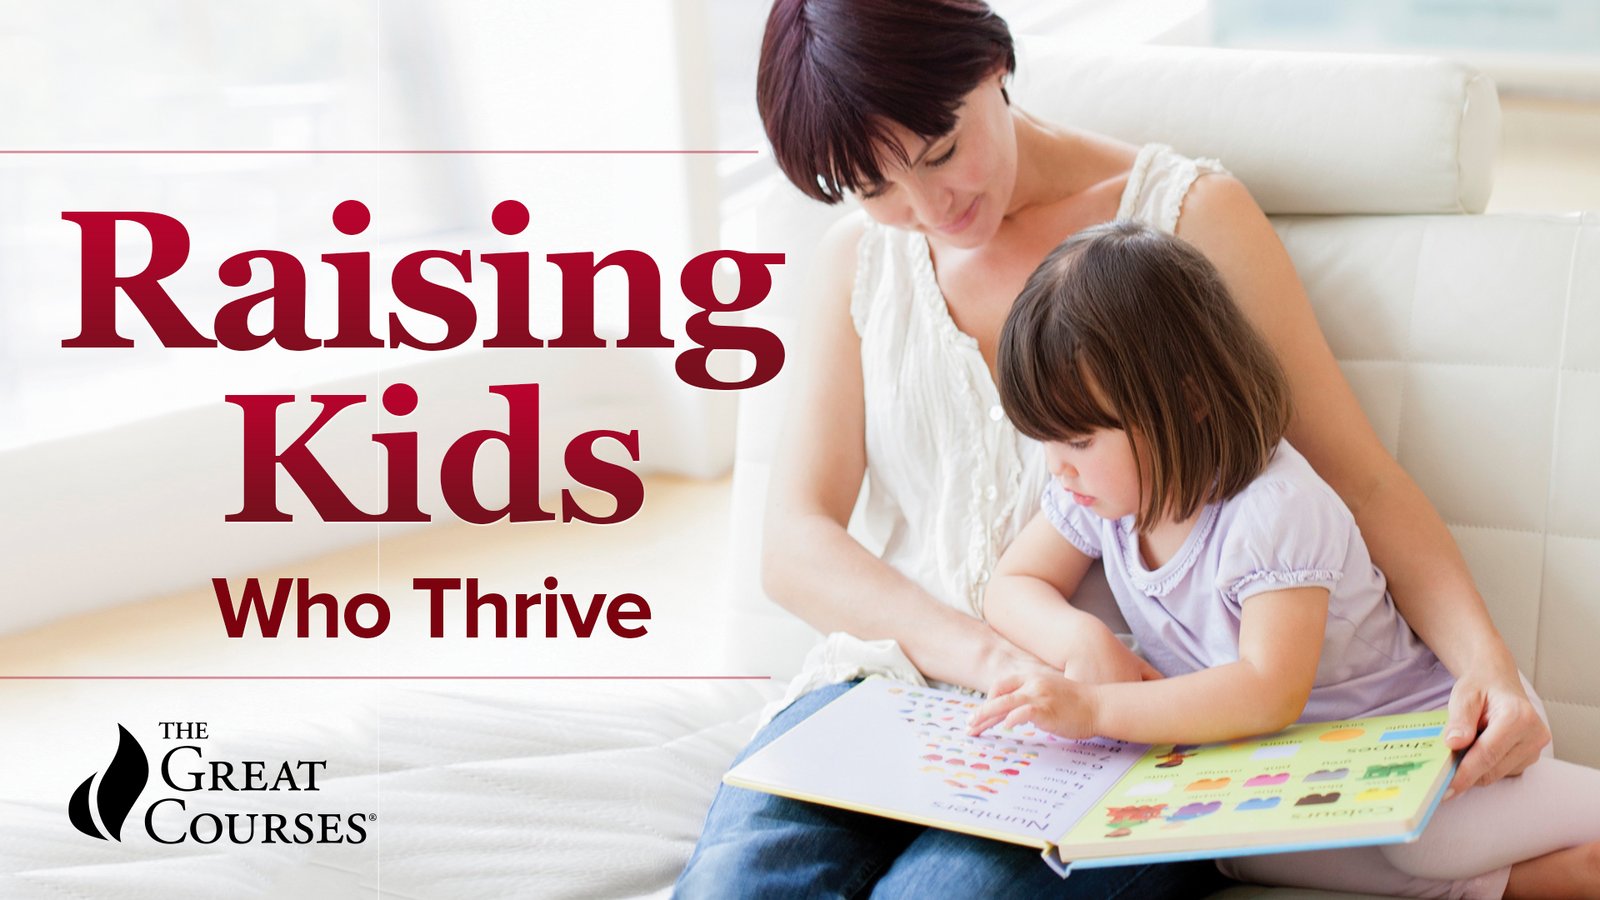 Scientific Secrets for Raising Kids Who Thrive